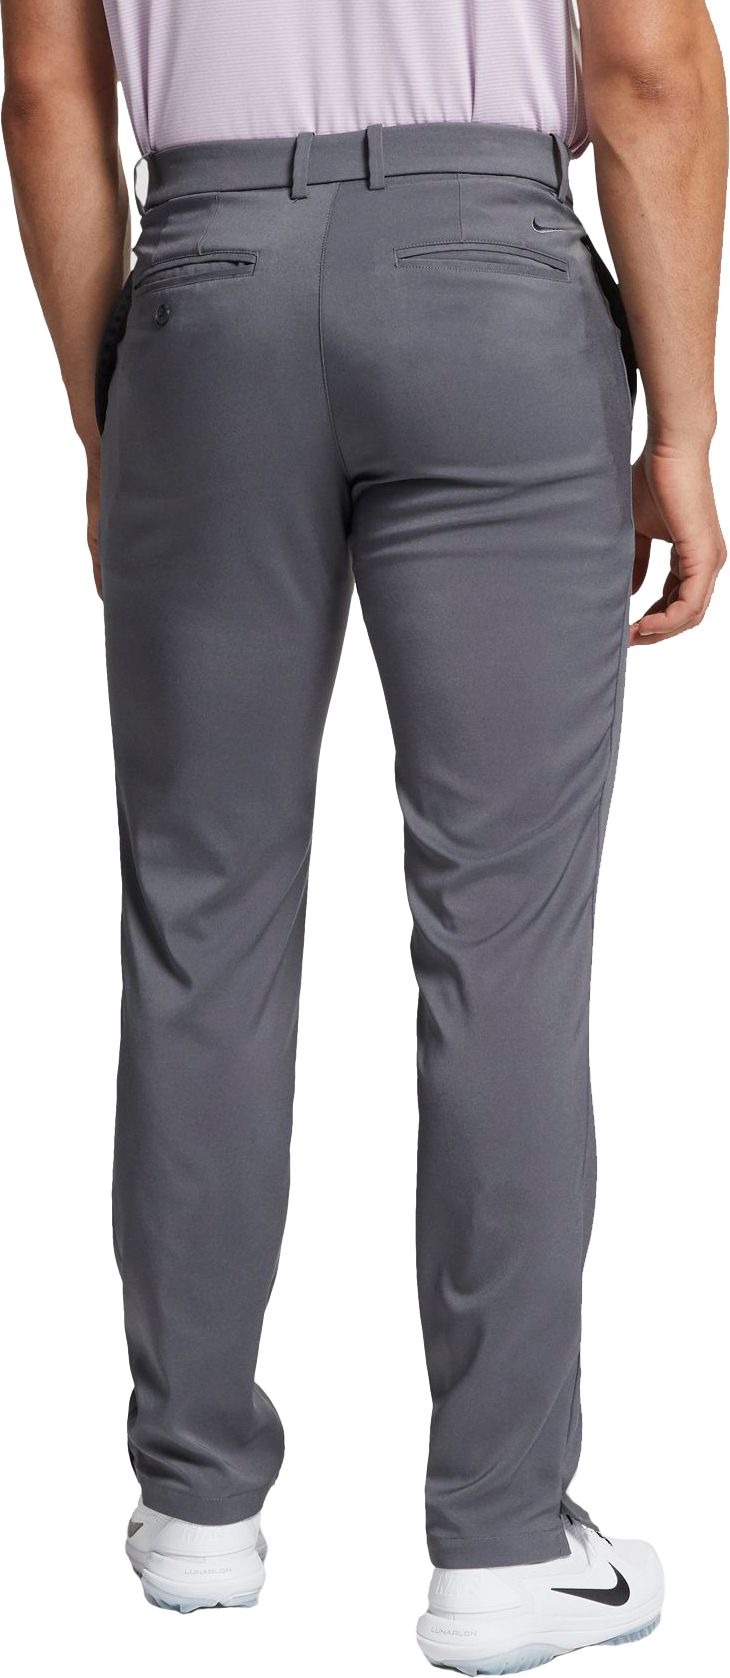 gray nike golf pants